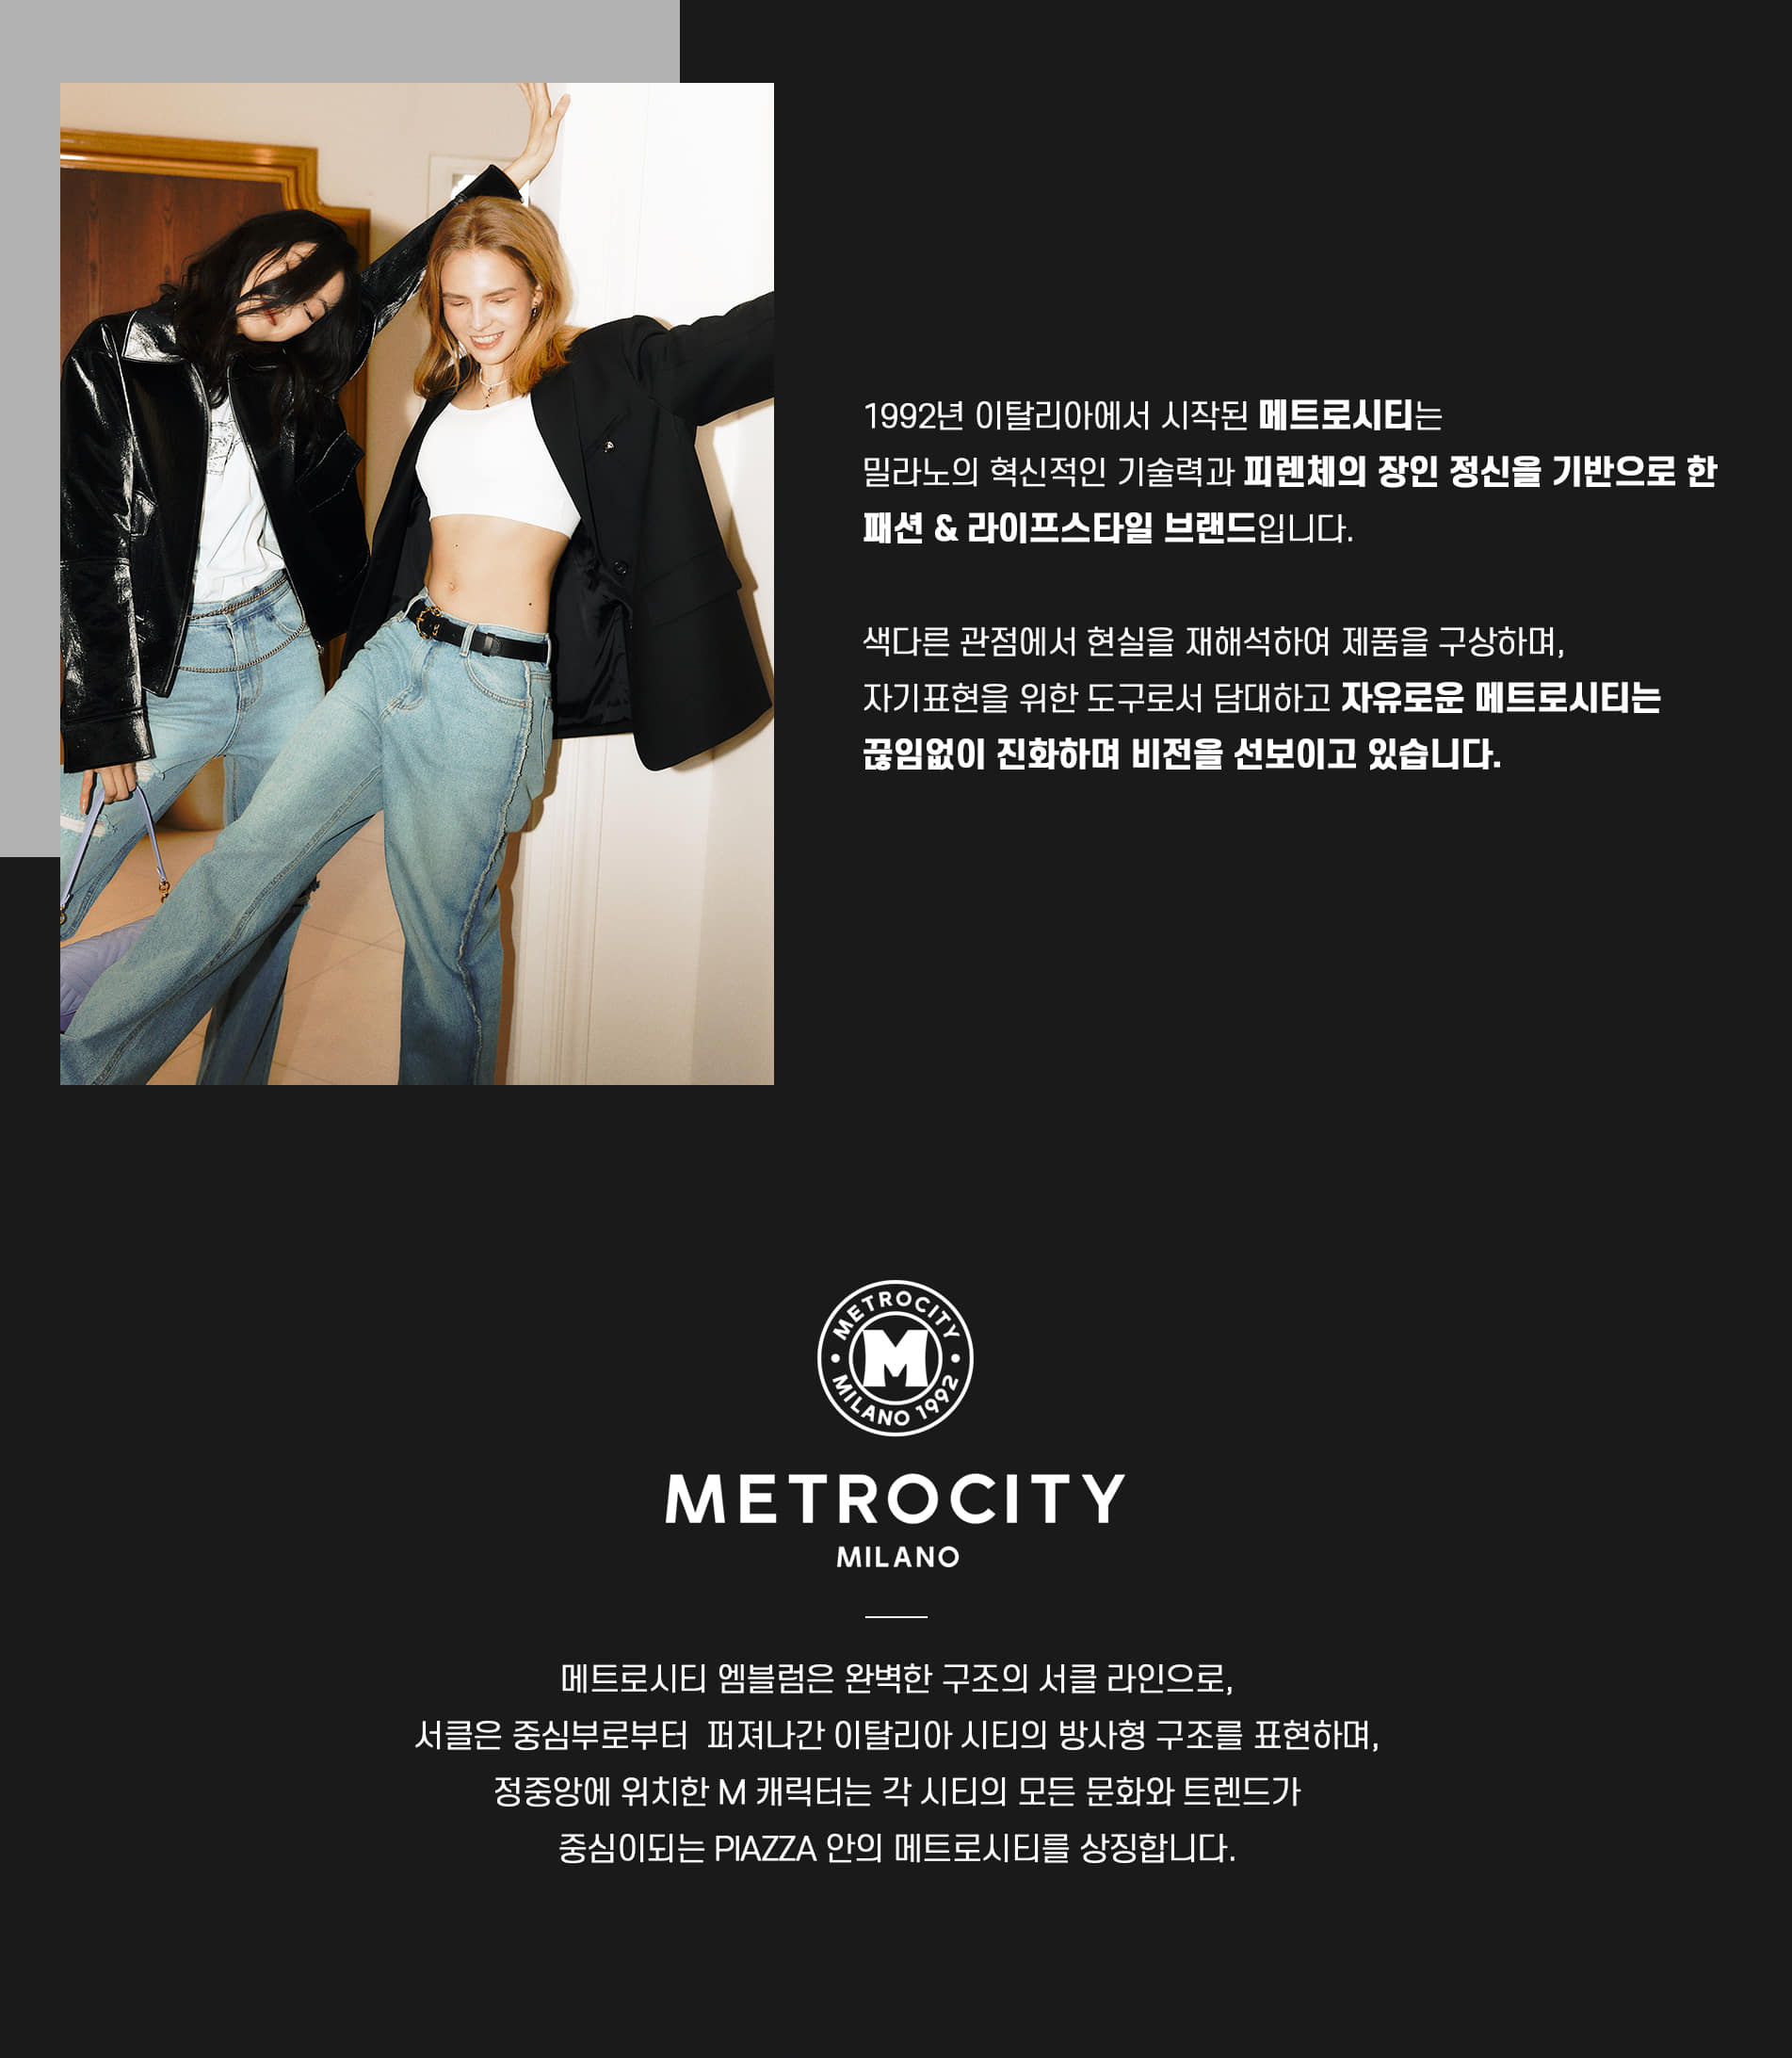 metrocity info